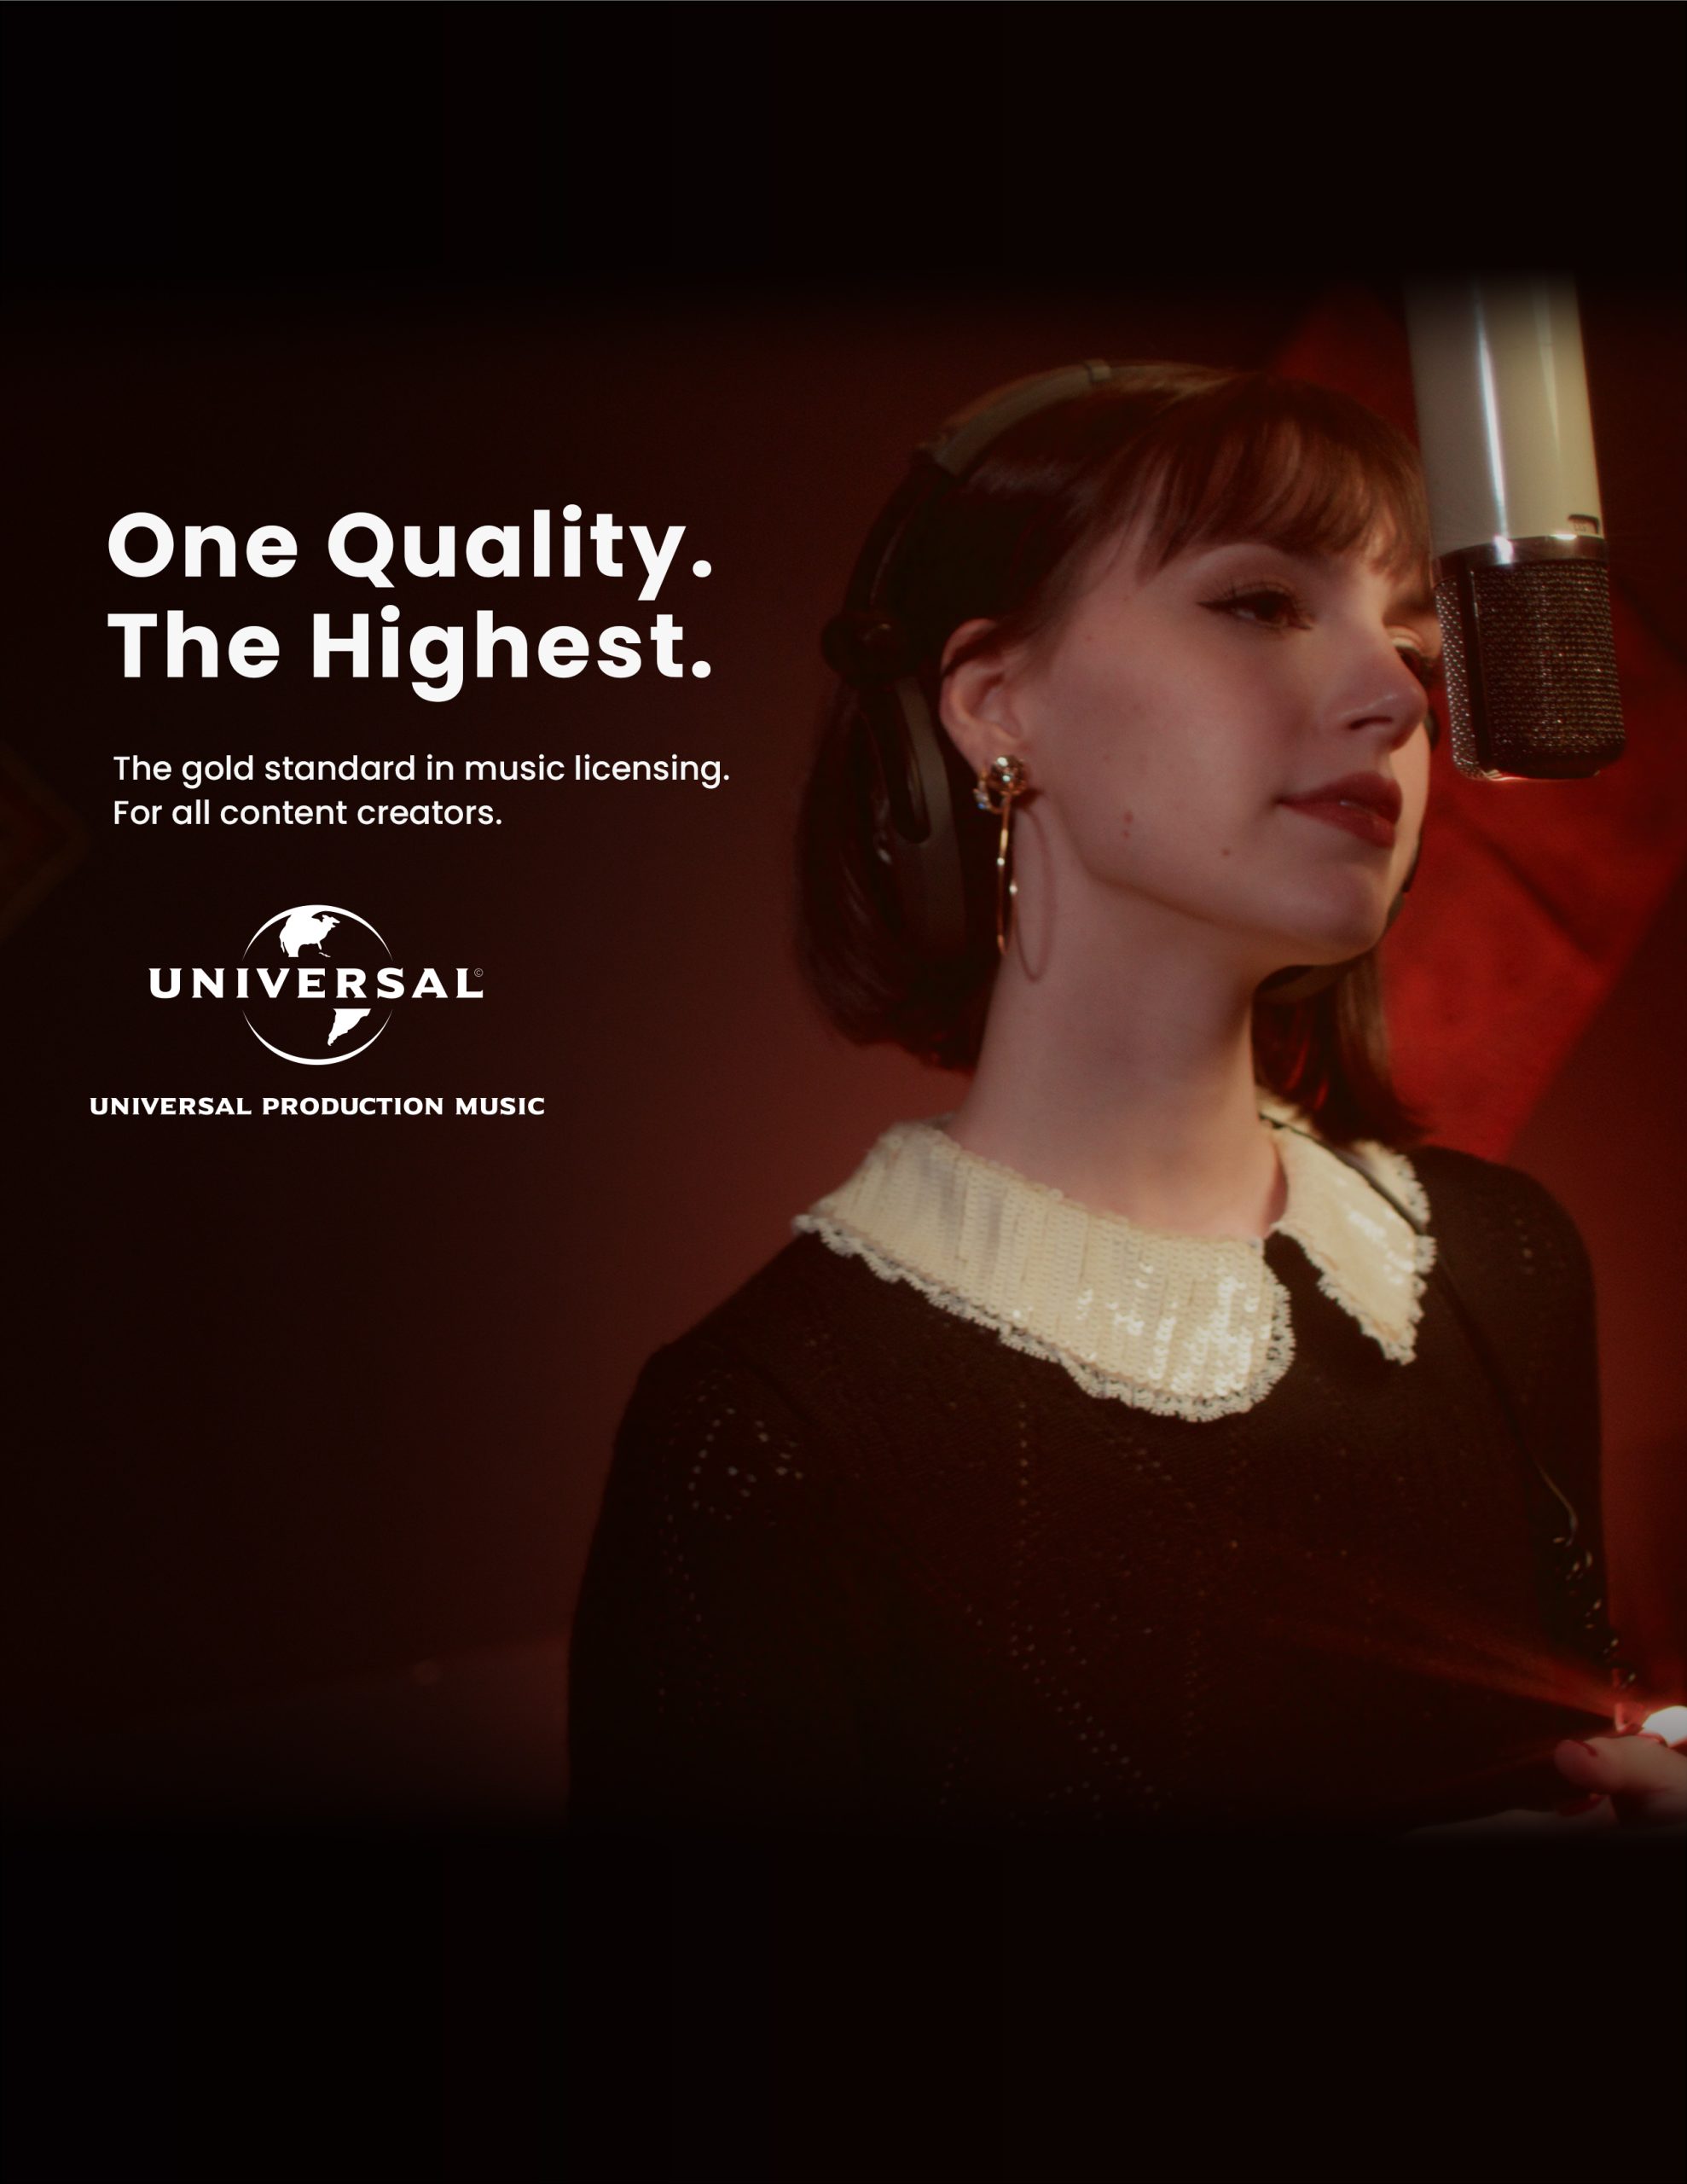 Universal Production Music – Variety Print Ad